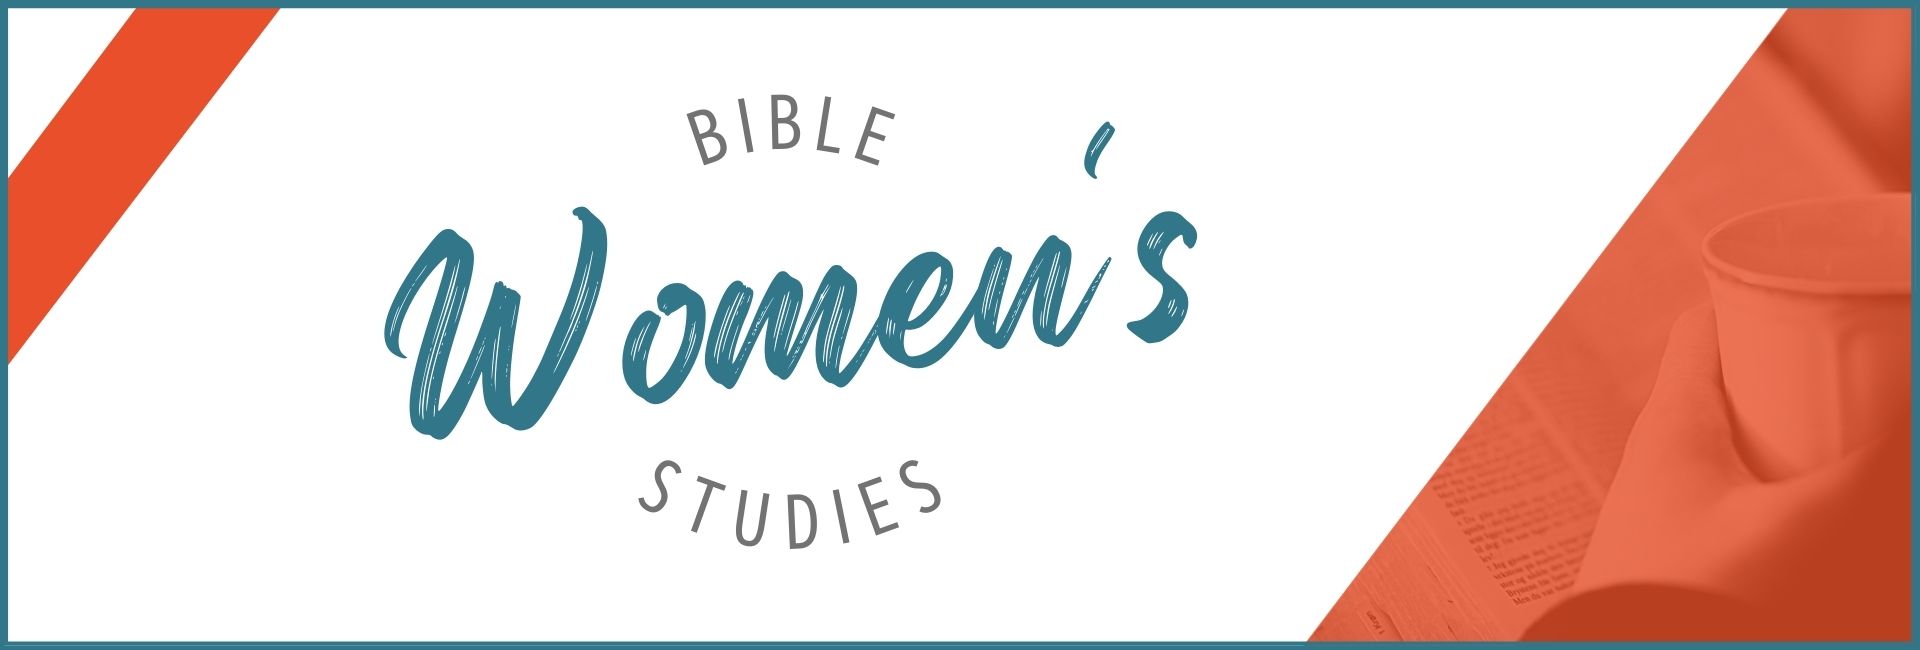 Women's Bible Study F22 Web